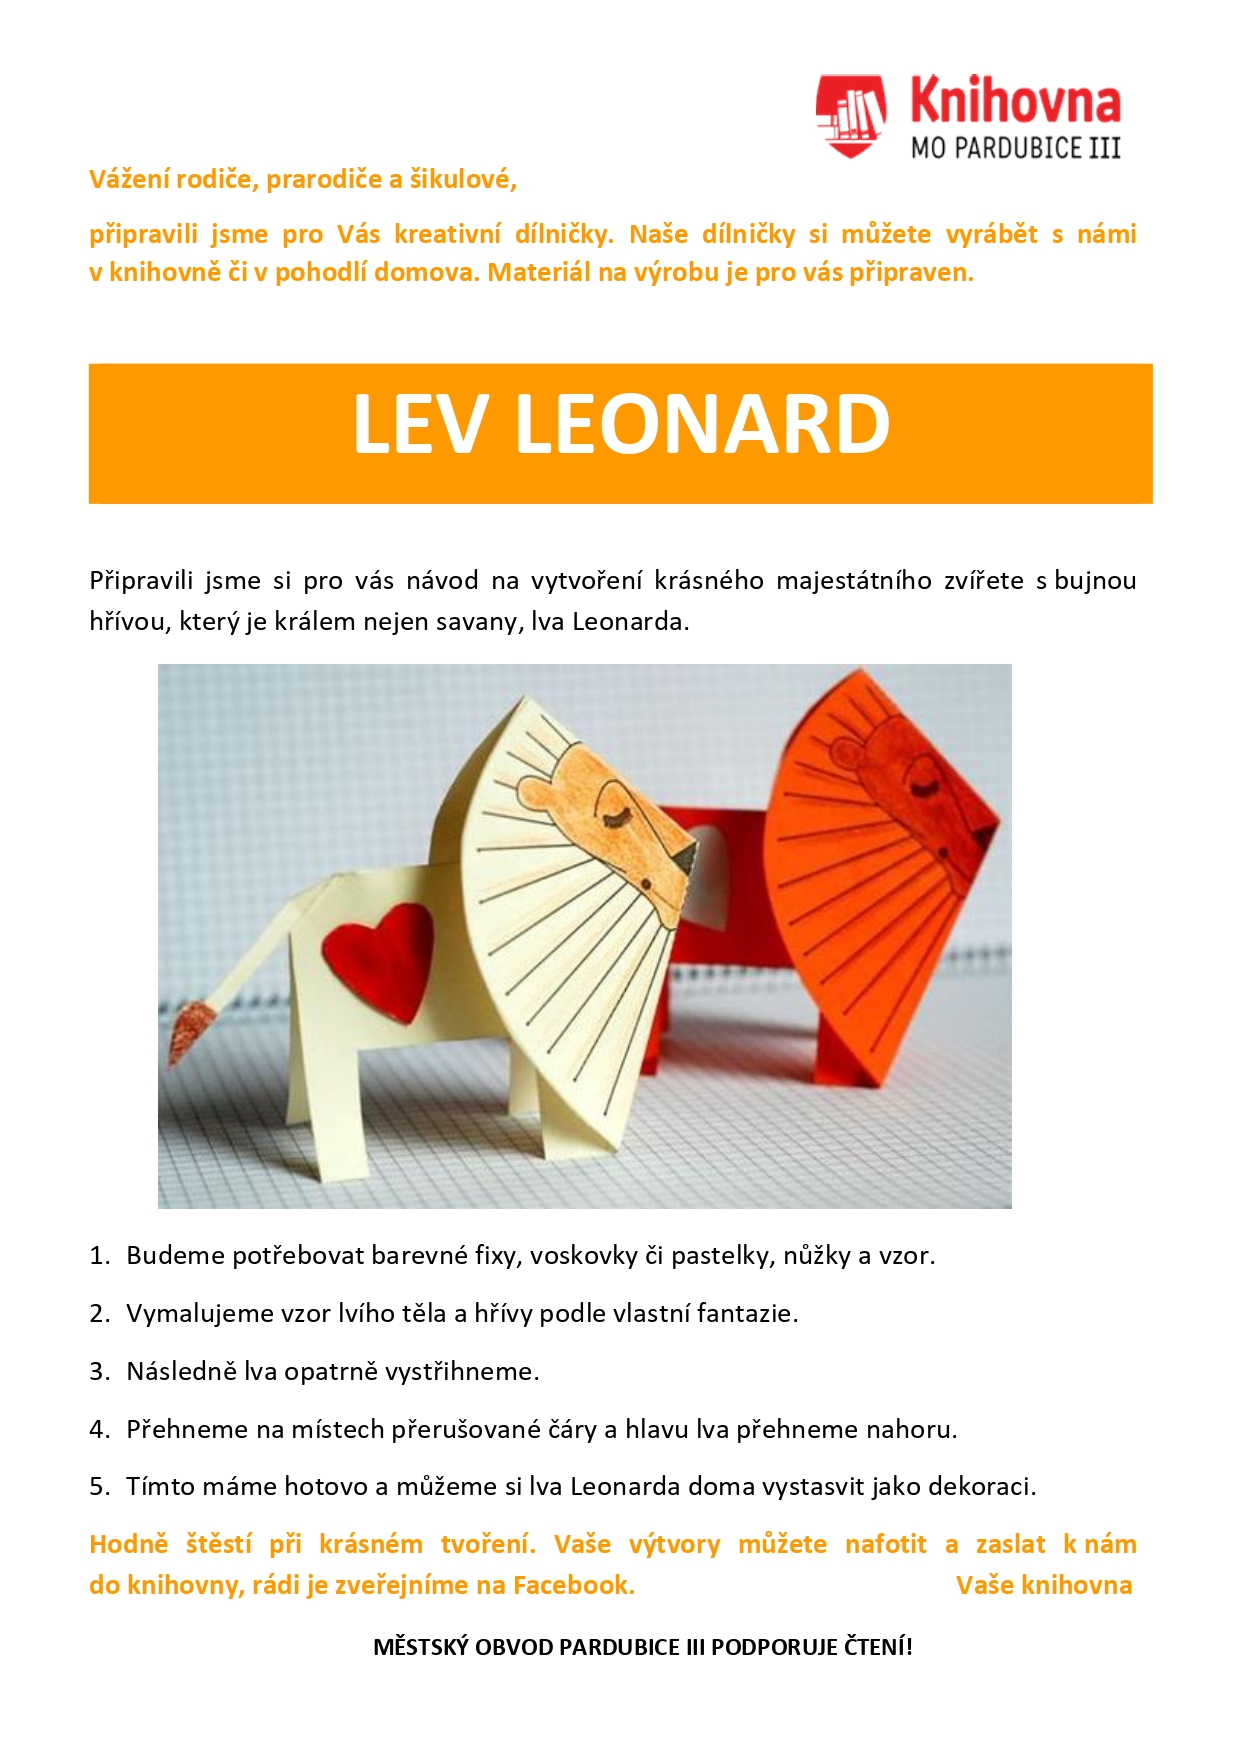 Lev leonard